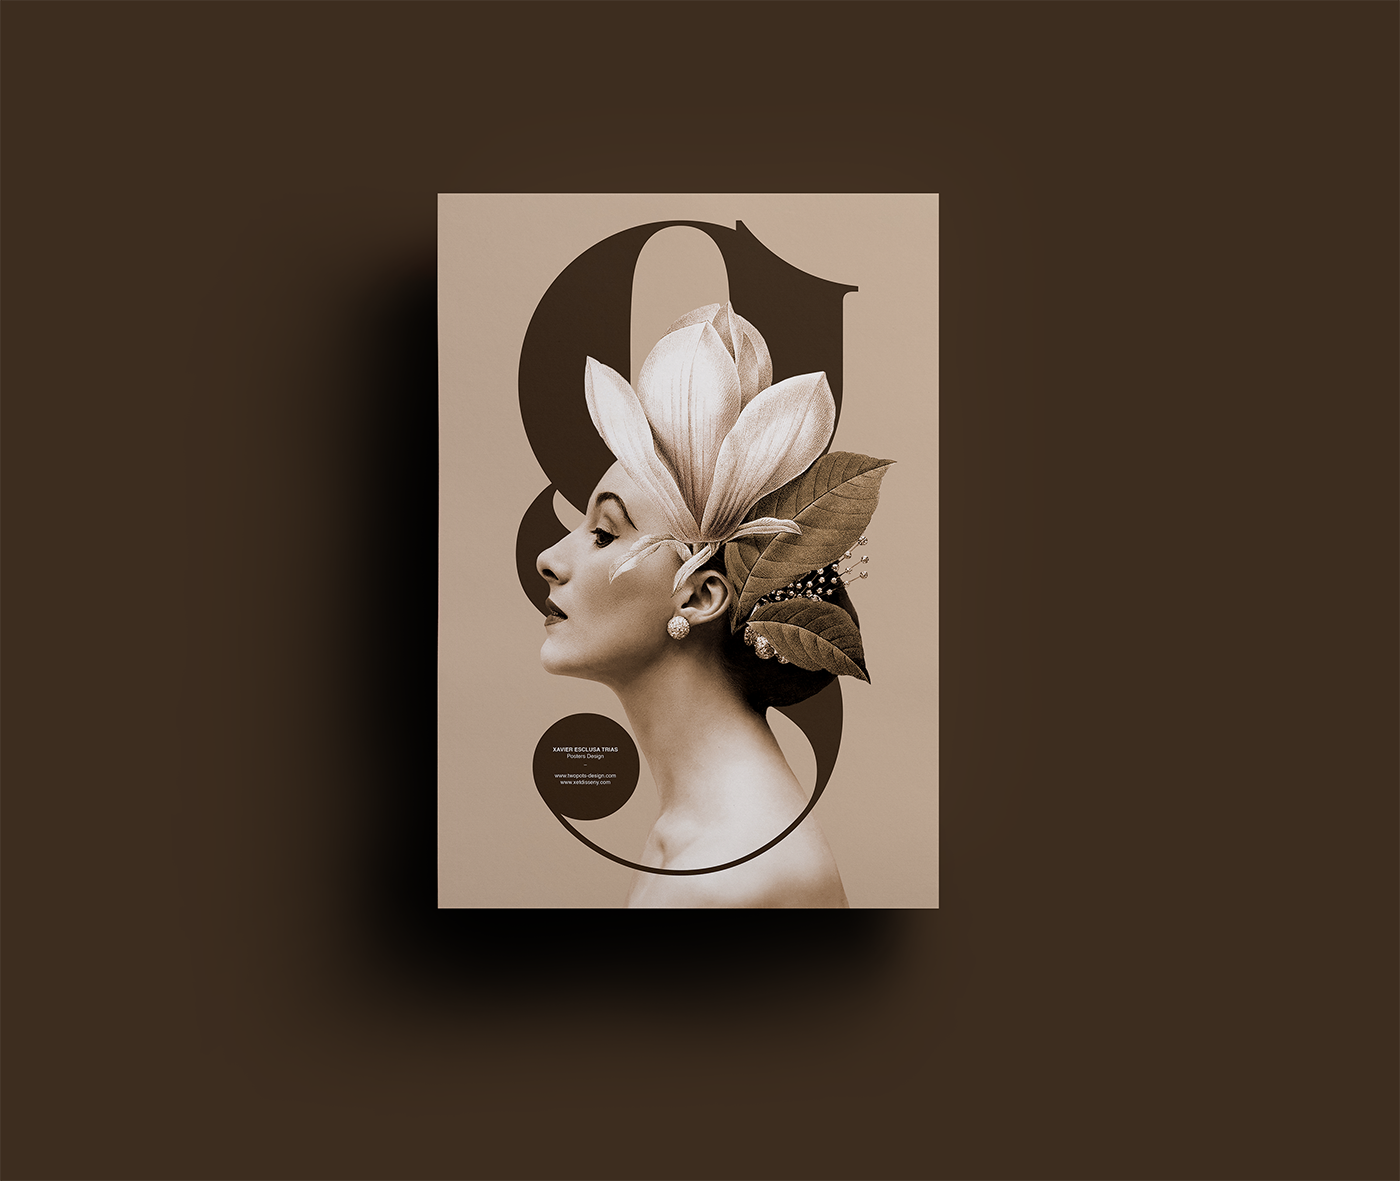 Xavier Esclusa Trias Behance maDame type minimal Twopots bcn poster bauhaus Swiss Poster Flowers design Minimalism